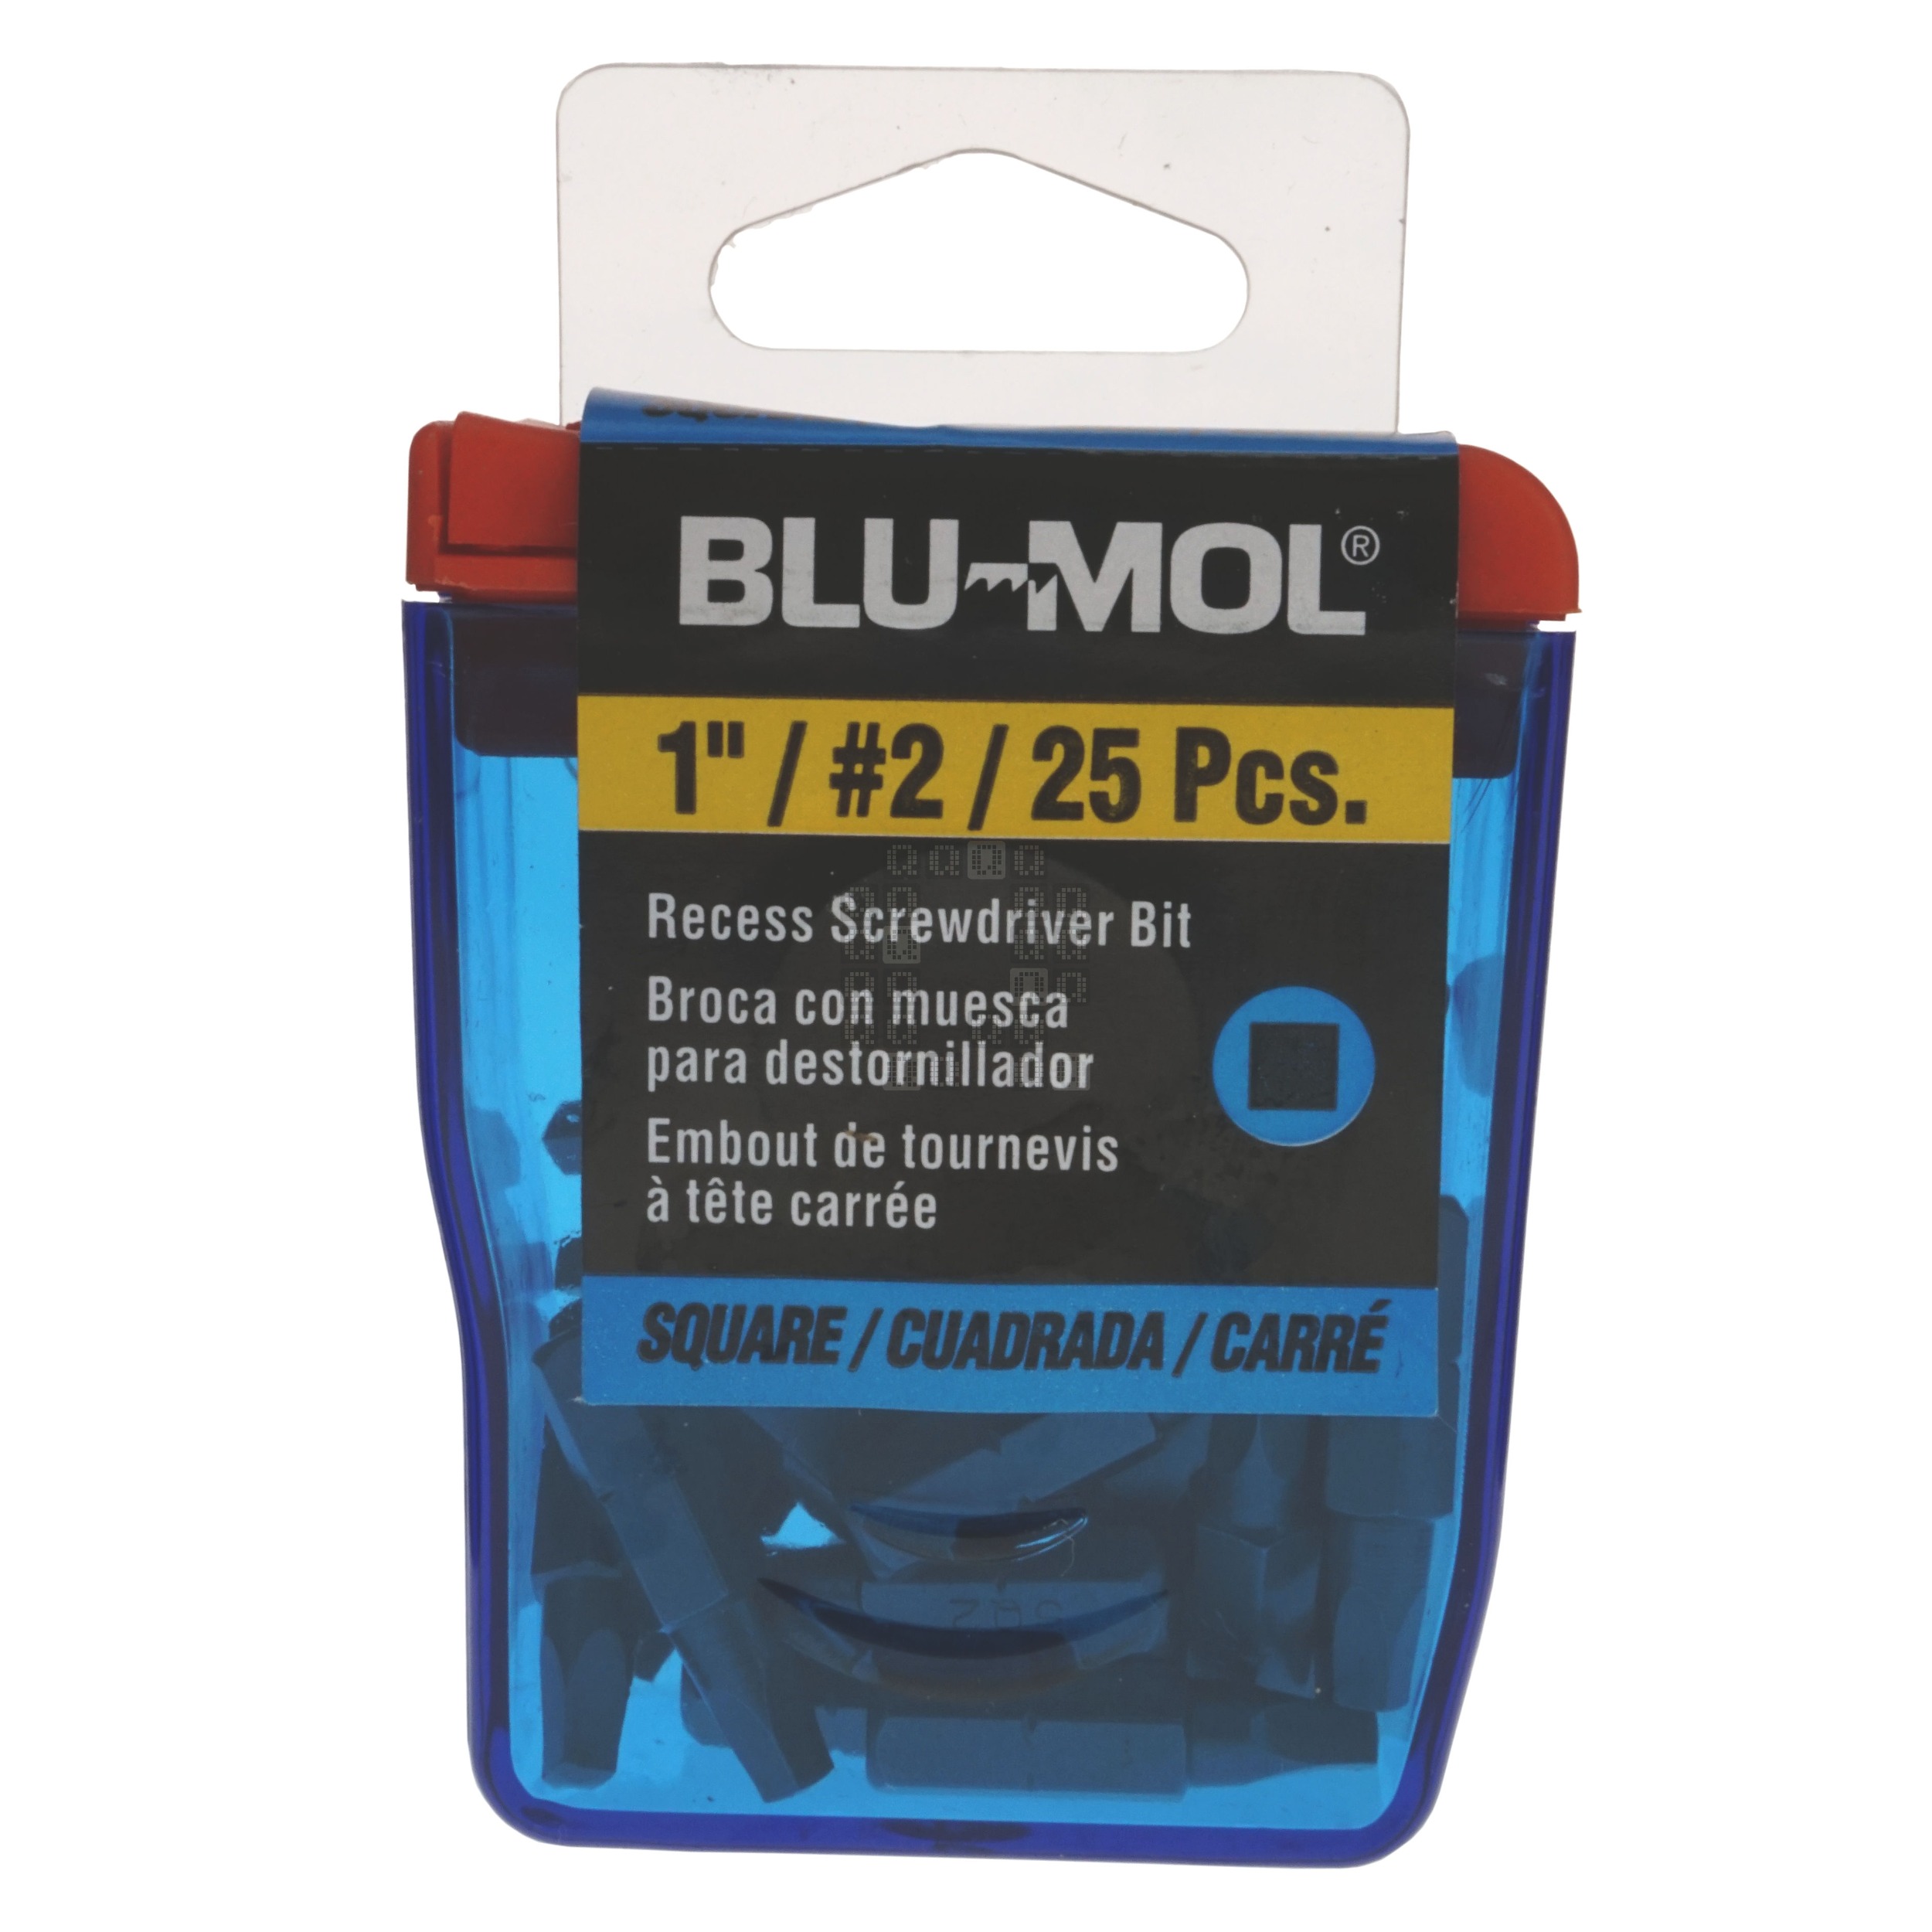 BLU-MOL 00058 SQ2 / #2 Square Recess Screwdriver Bits, 1" Length, 25-Pack